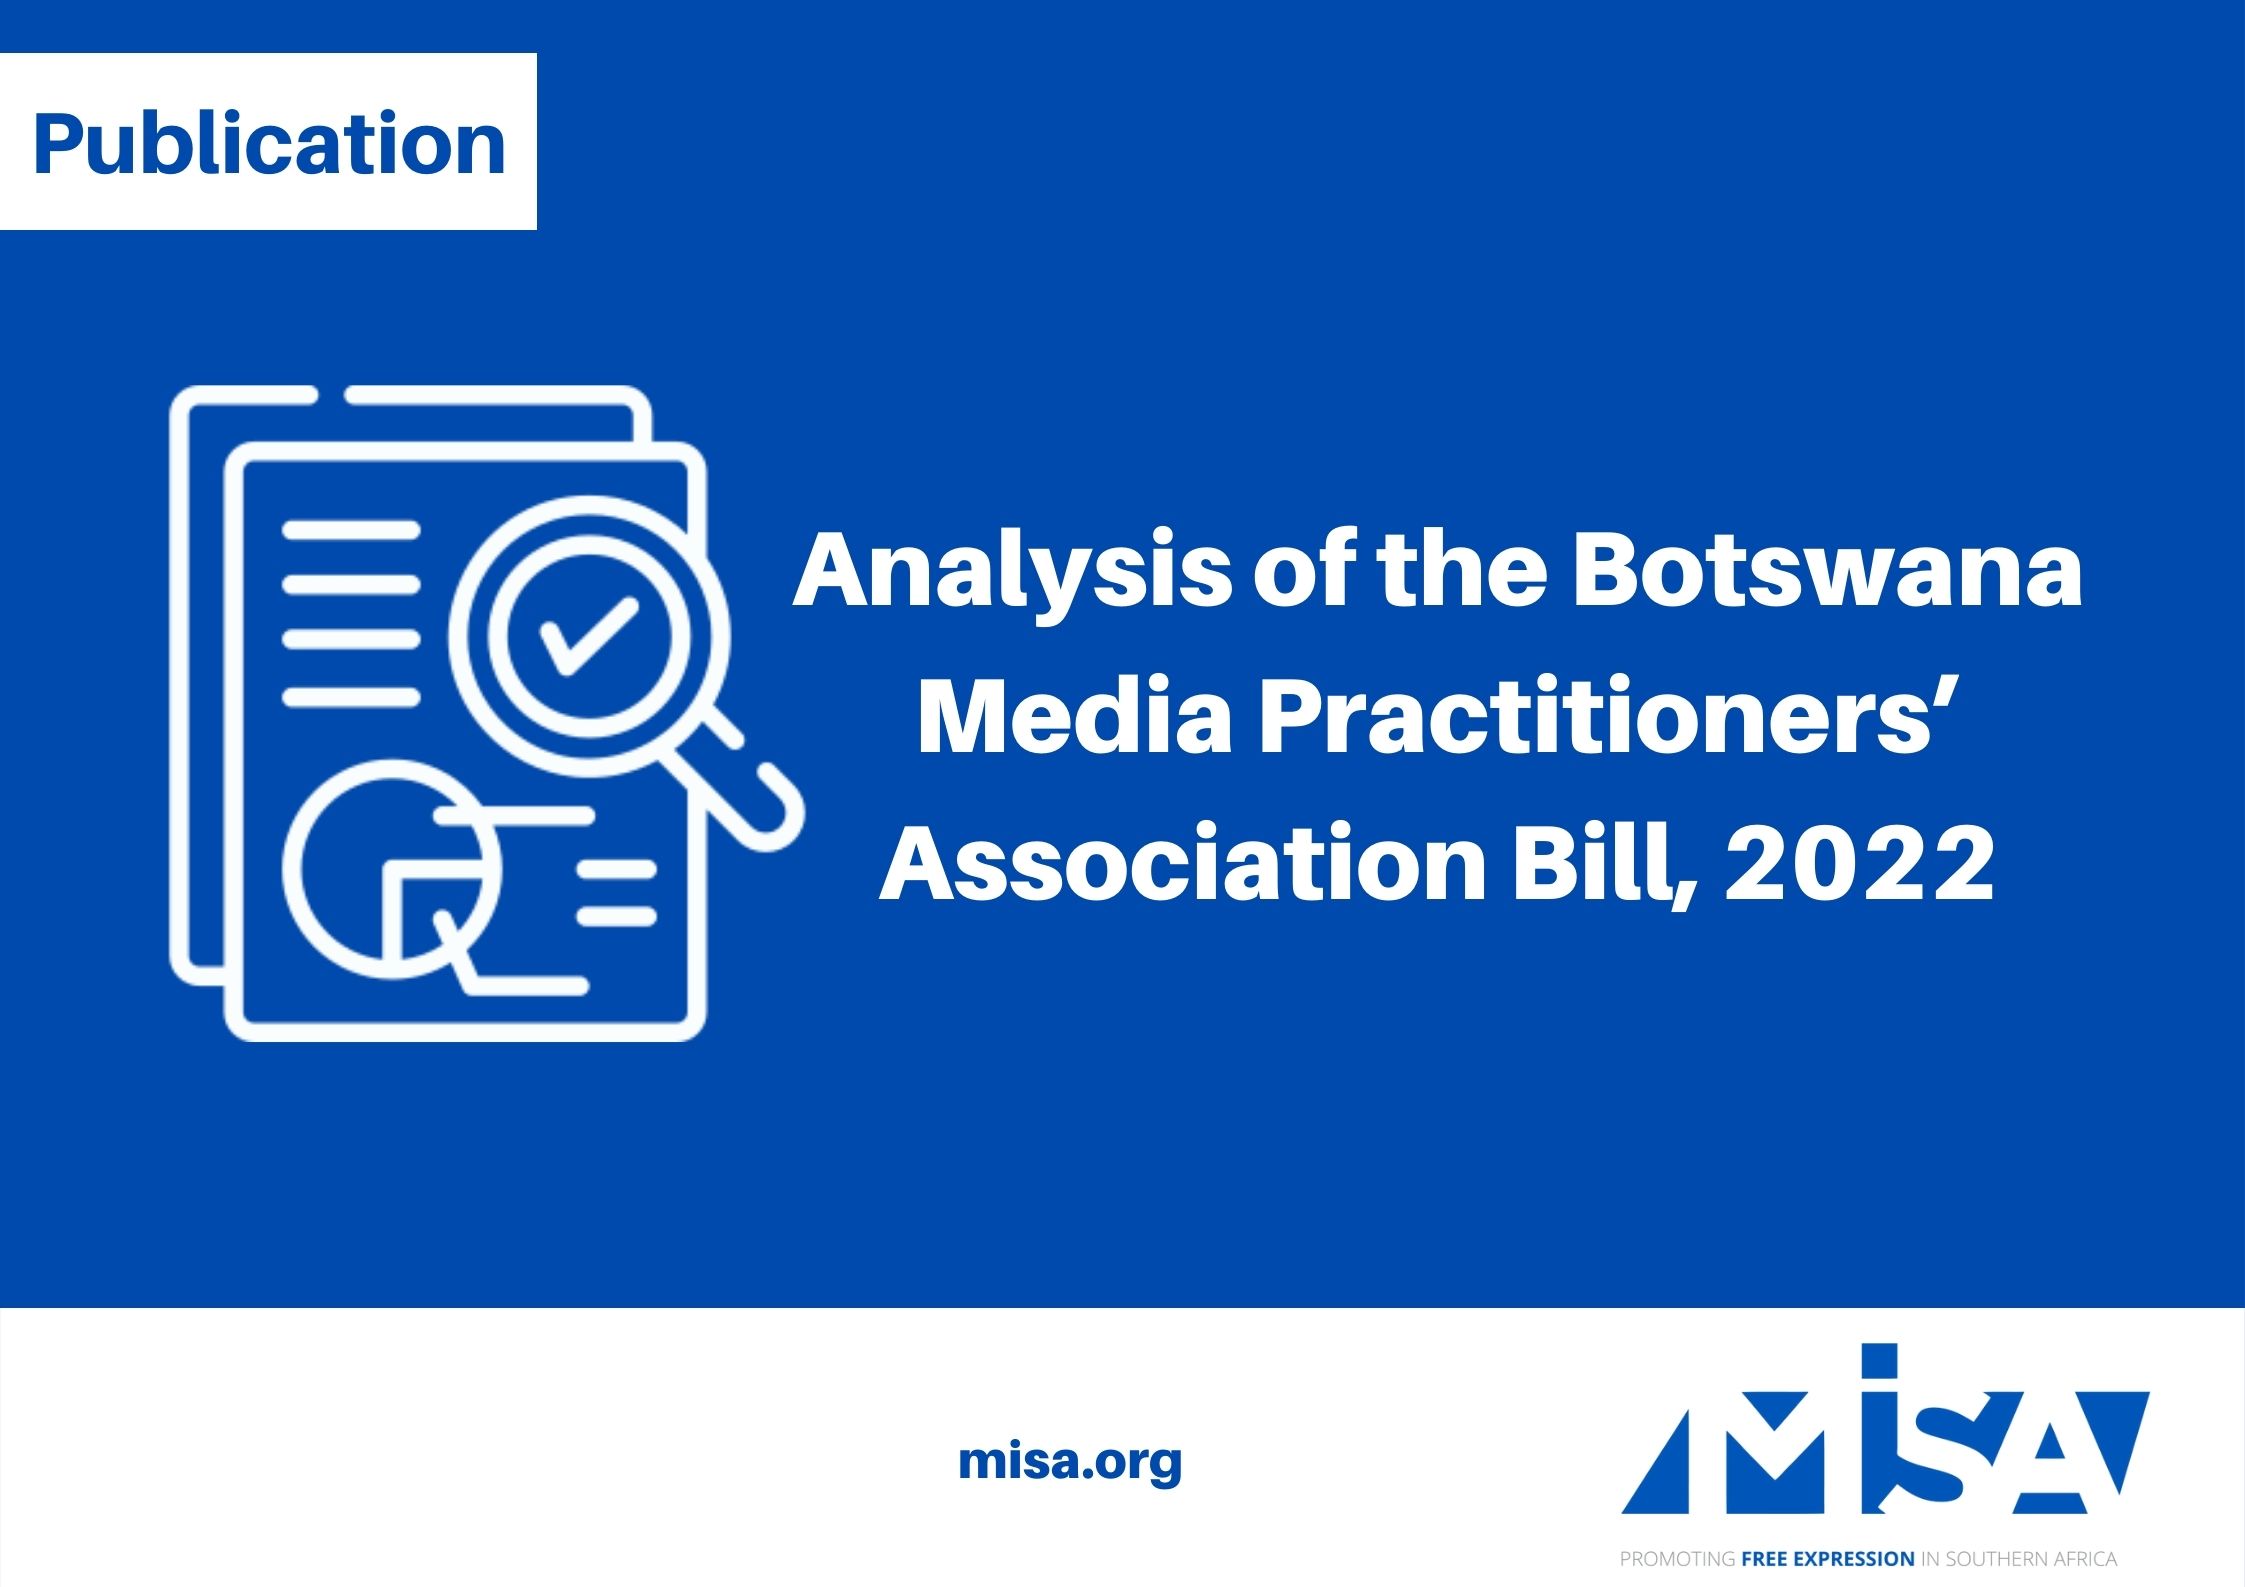 Analysis of the Botswana Media Practitioners’ Association Bill, 2022